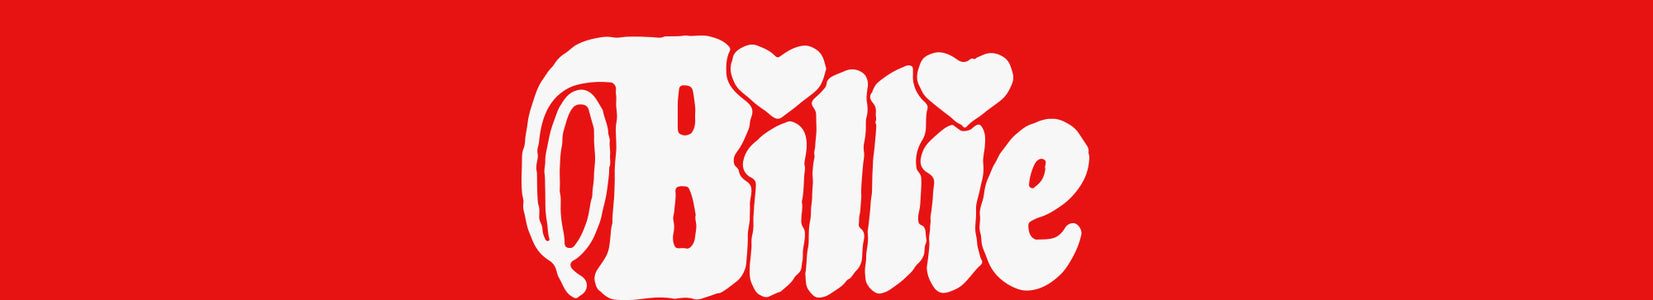 Billie Eilish AU Store logo